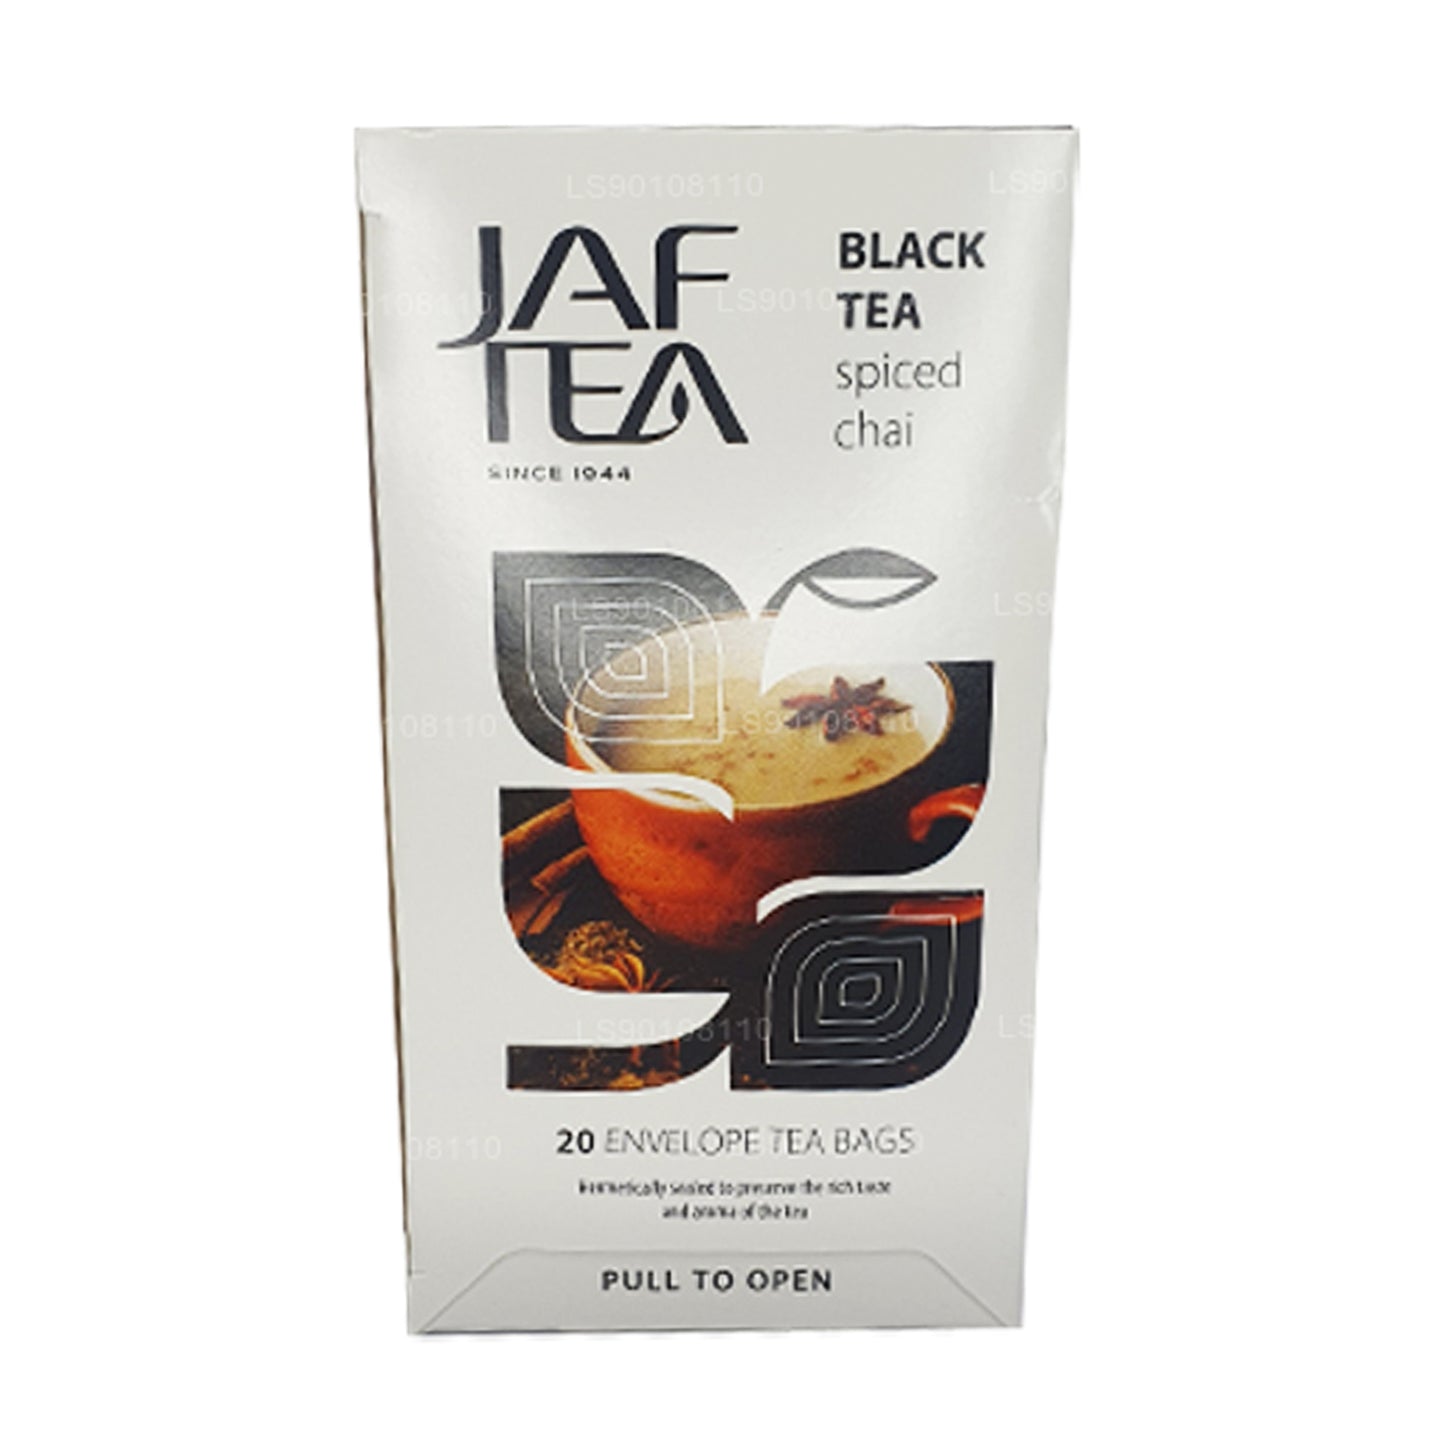 Jaf Çay Saf Baharat Koleksiyonu Siyah Çay Baharatlı Chai (40g) 20 Çay Poşeti